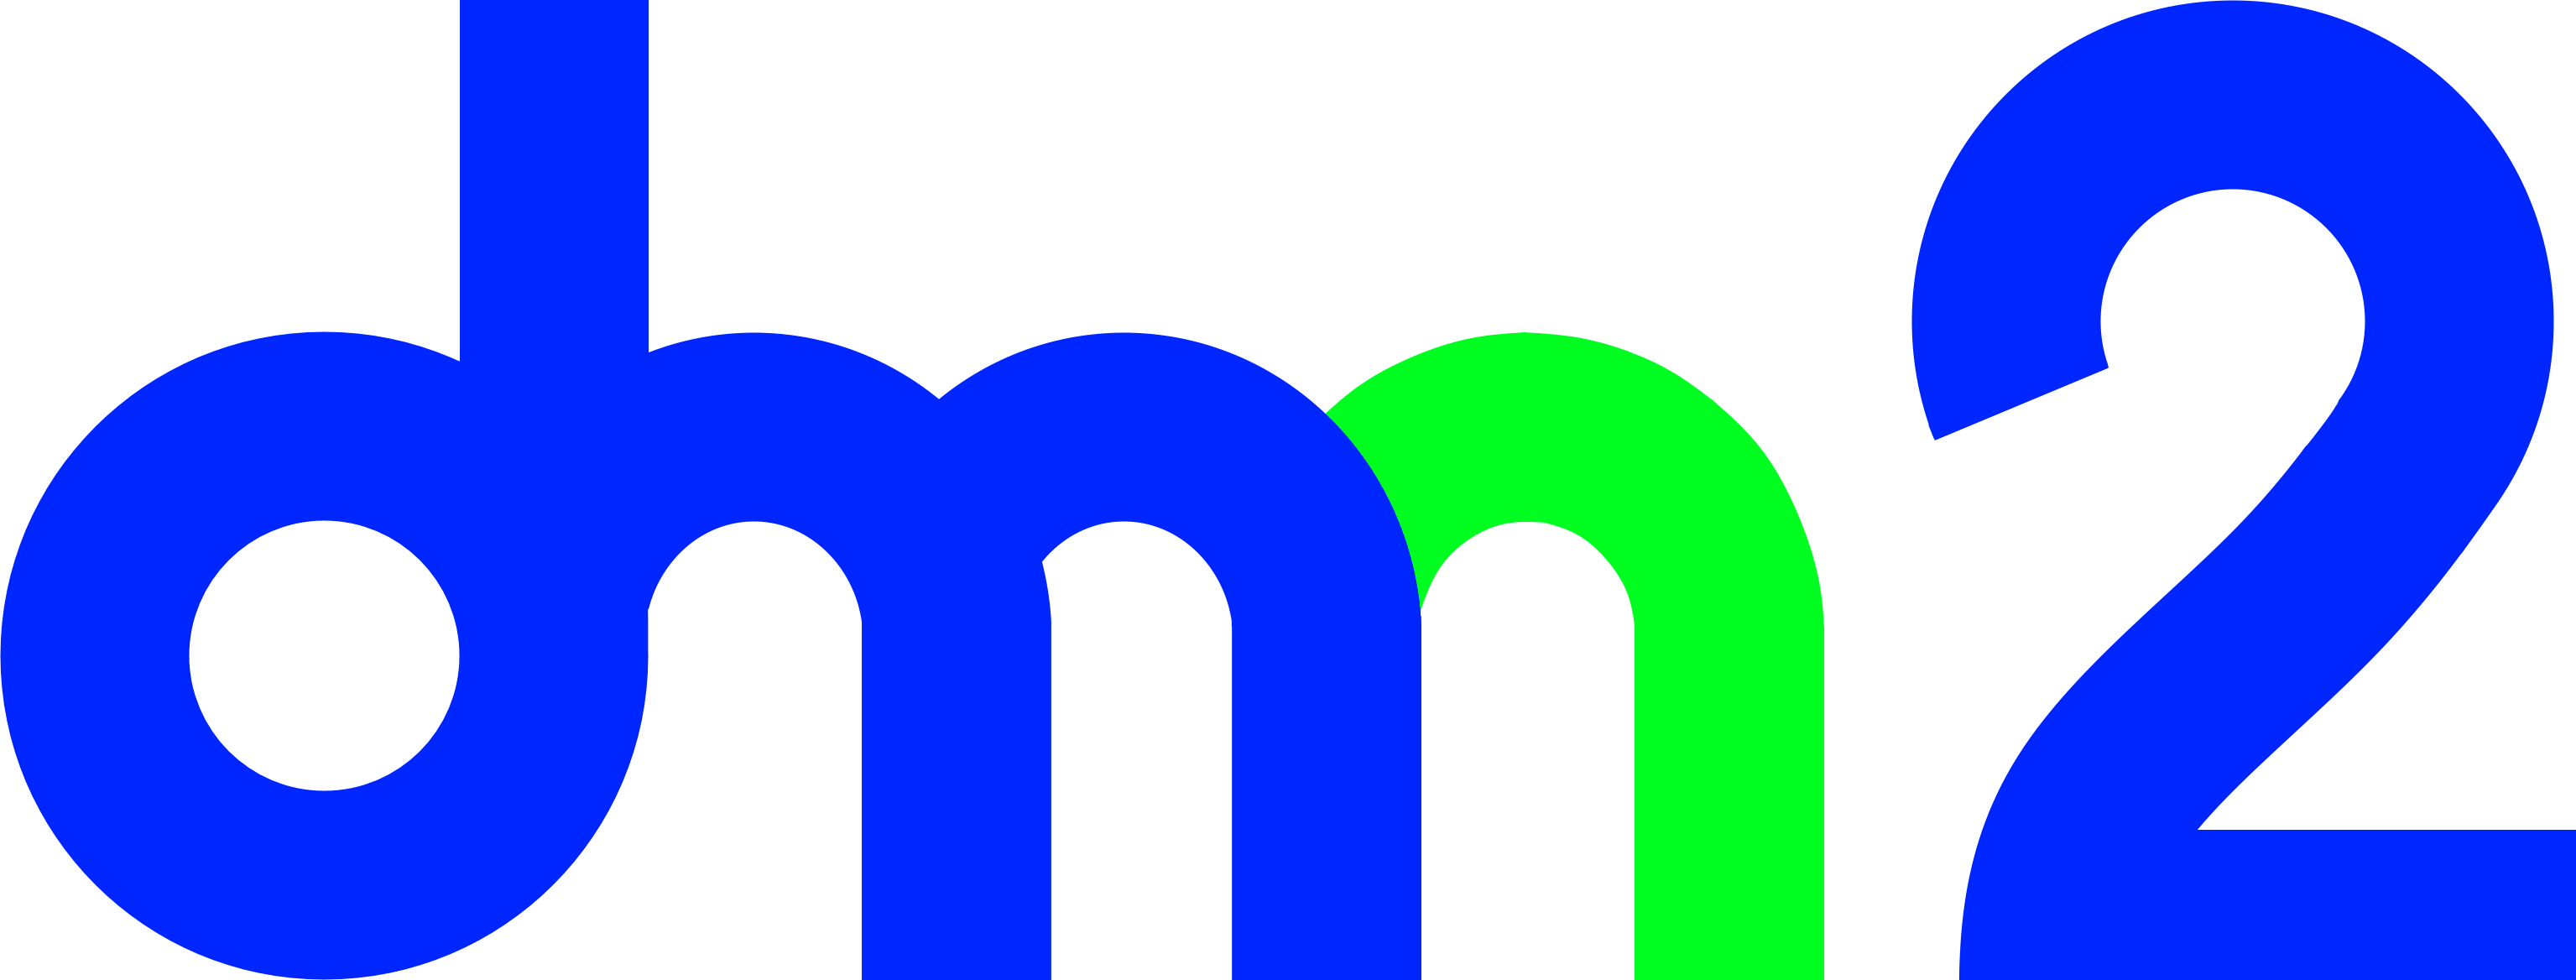 mm2 Entertainment - Wikipedia